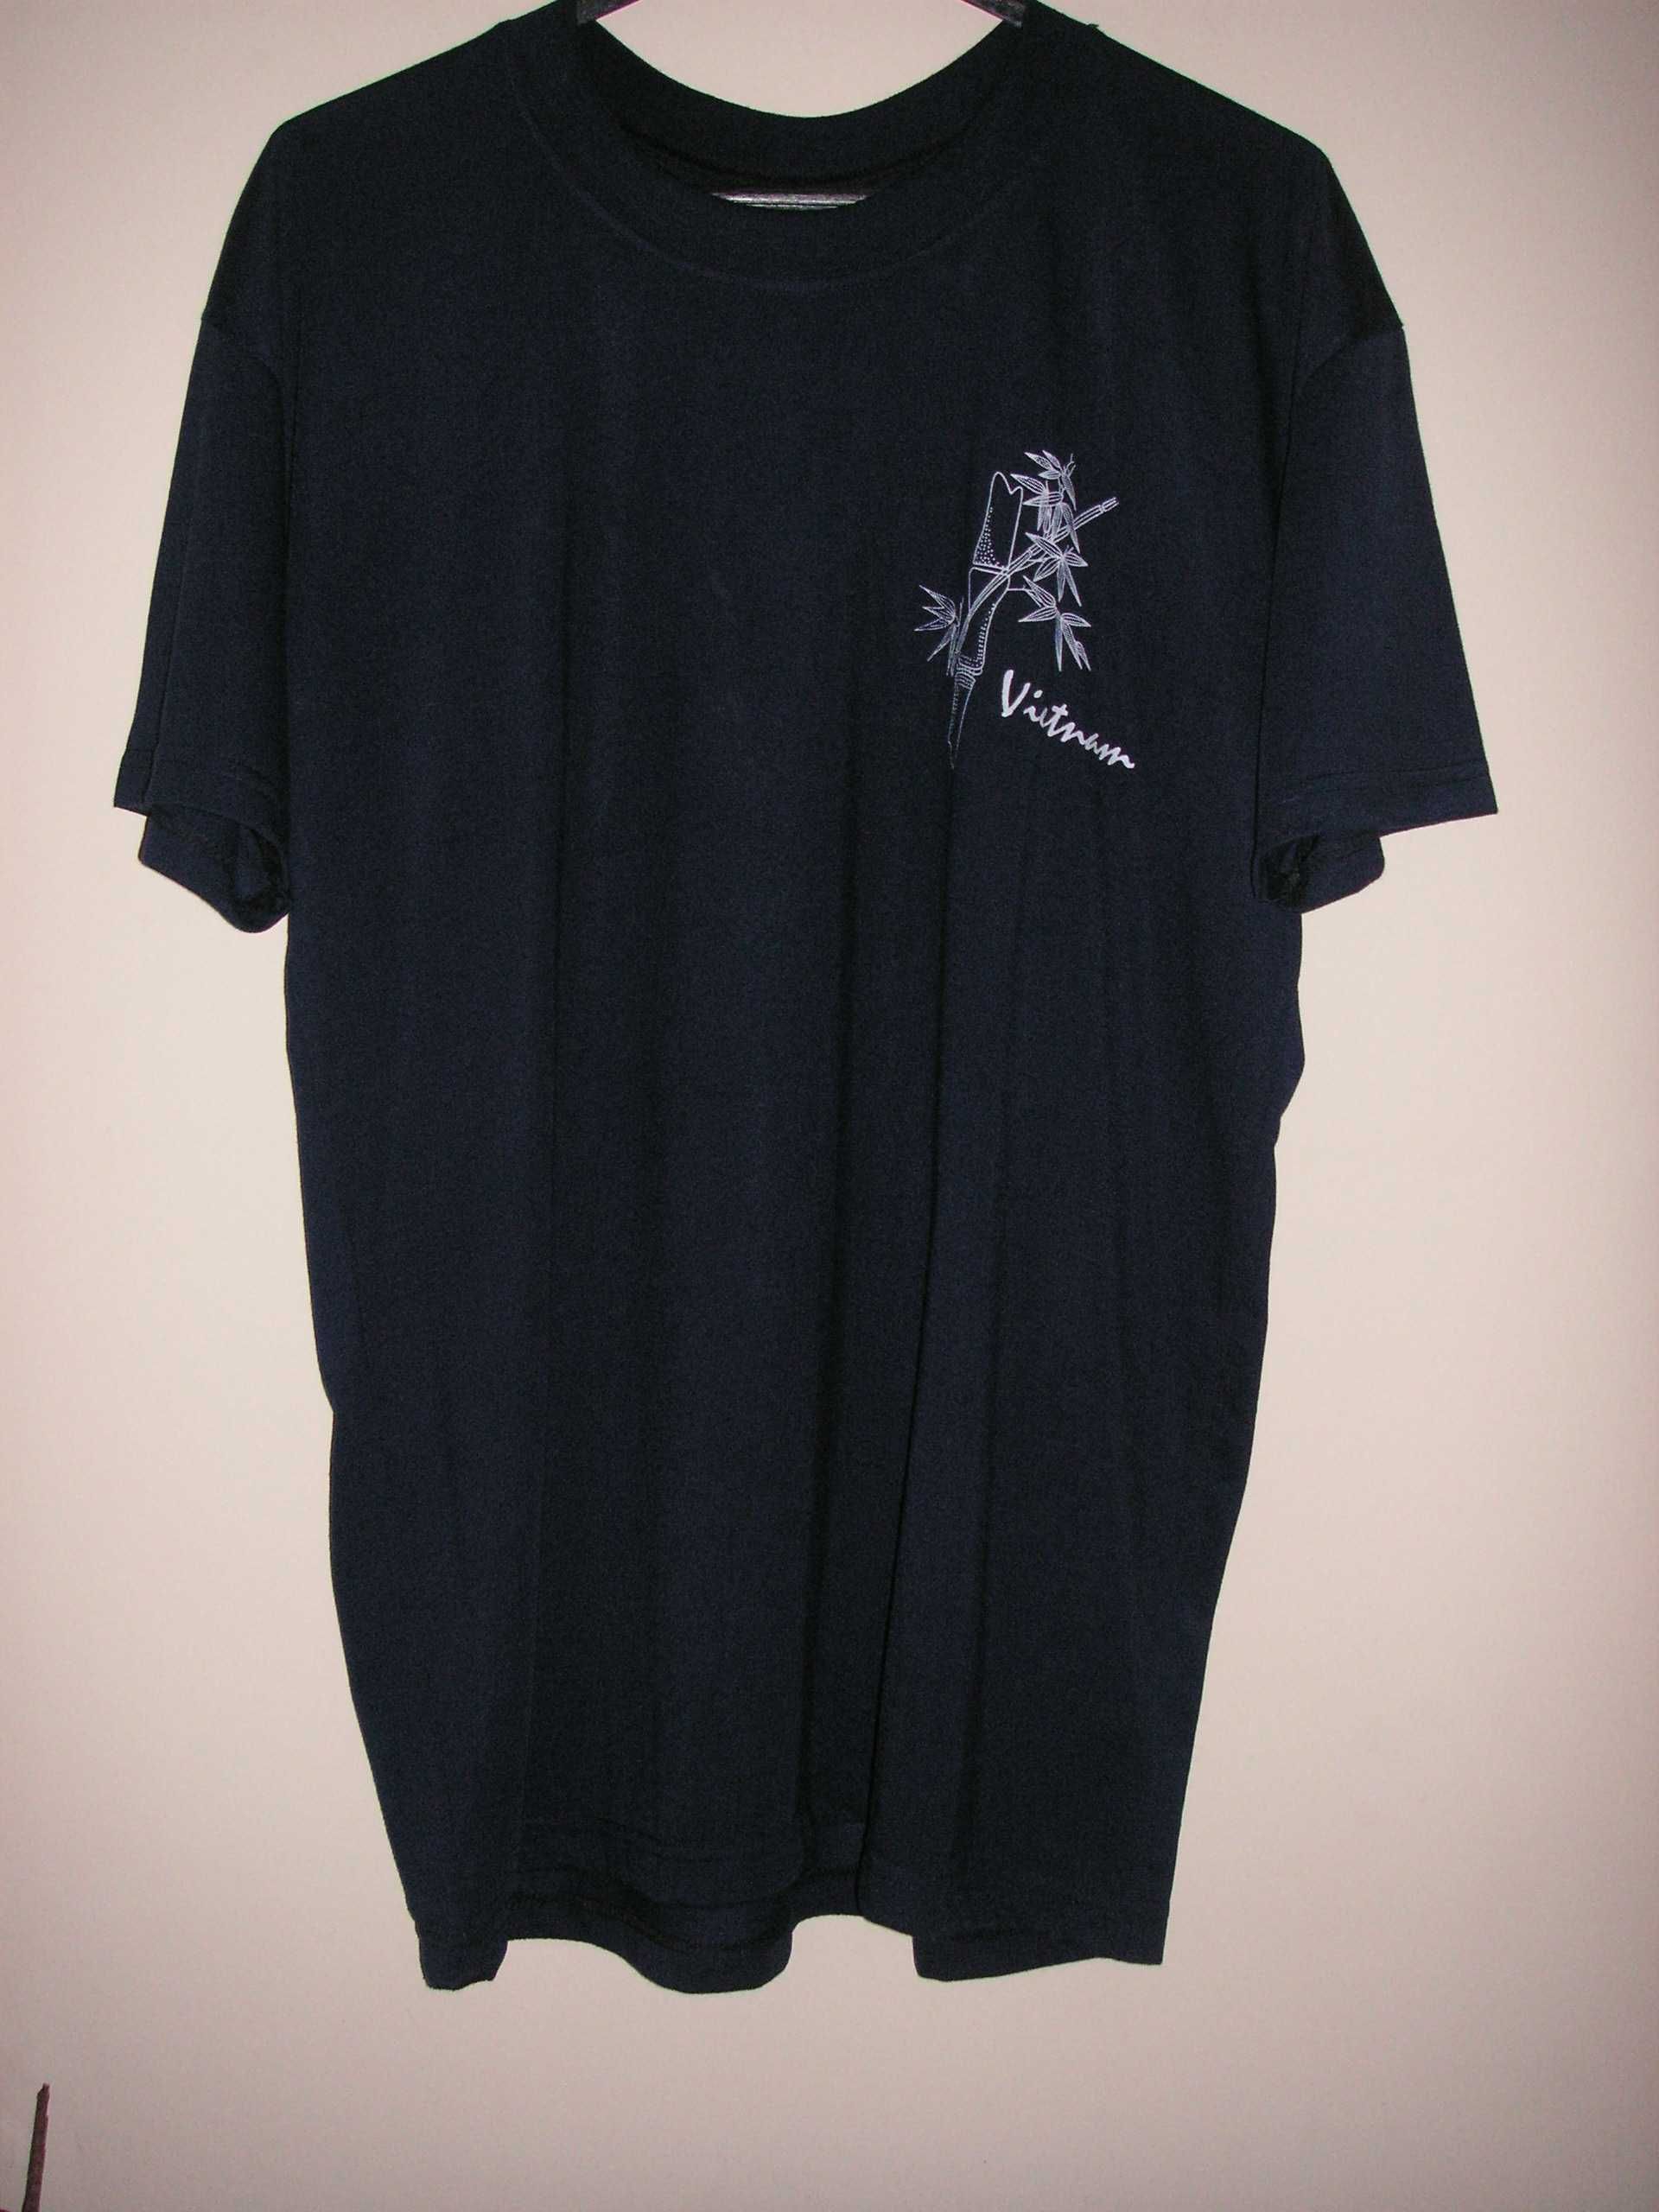 T Shirt - Camisola Países Estados Unidos, República Checa, Vietname, B